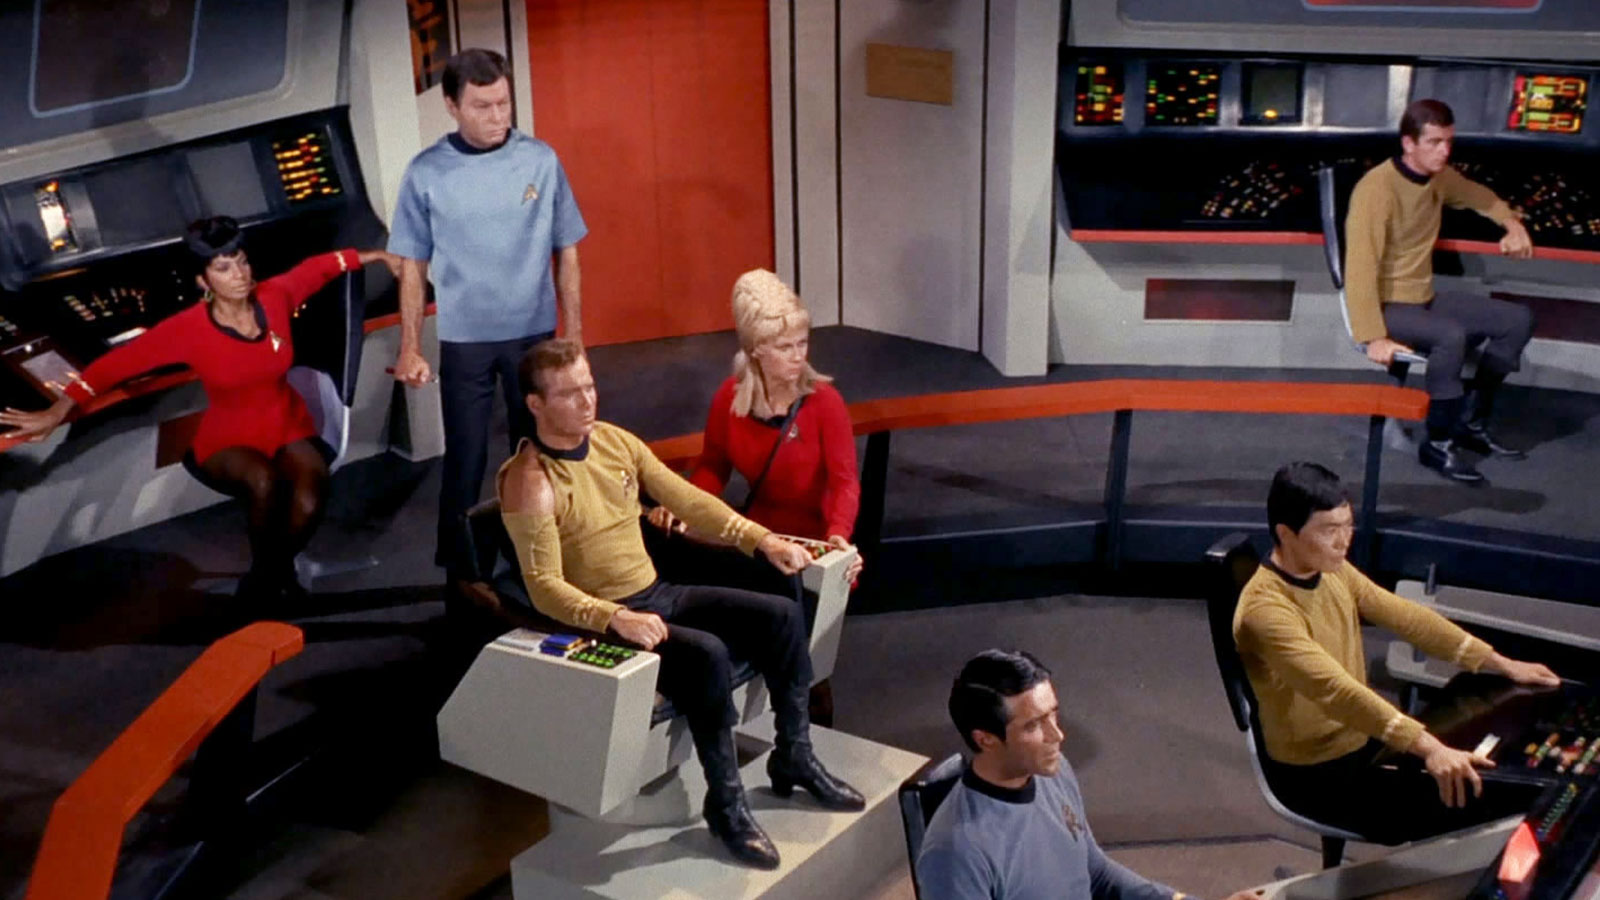 Star Trek: The Original Series set to open in upstate New York